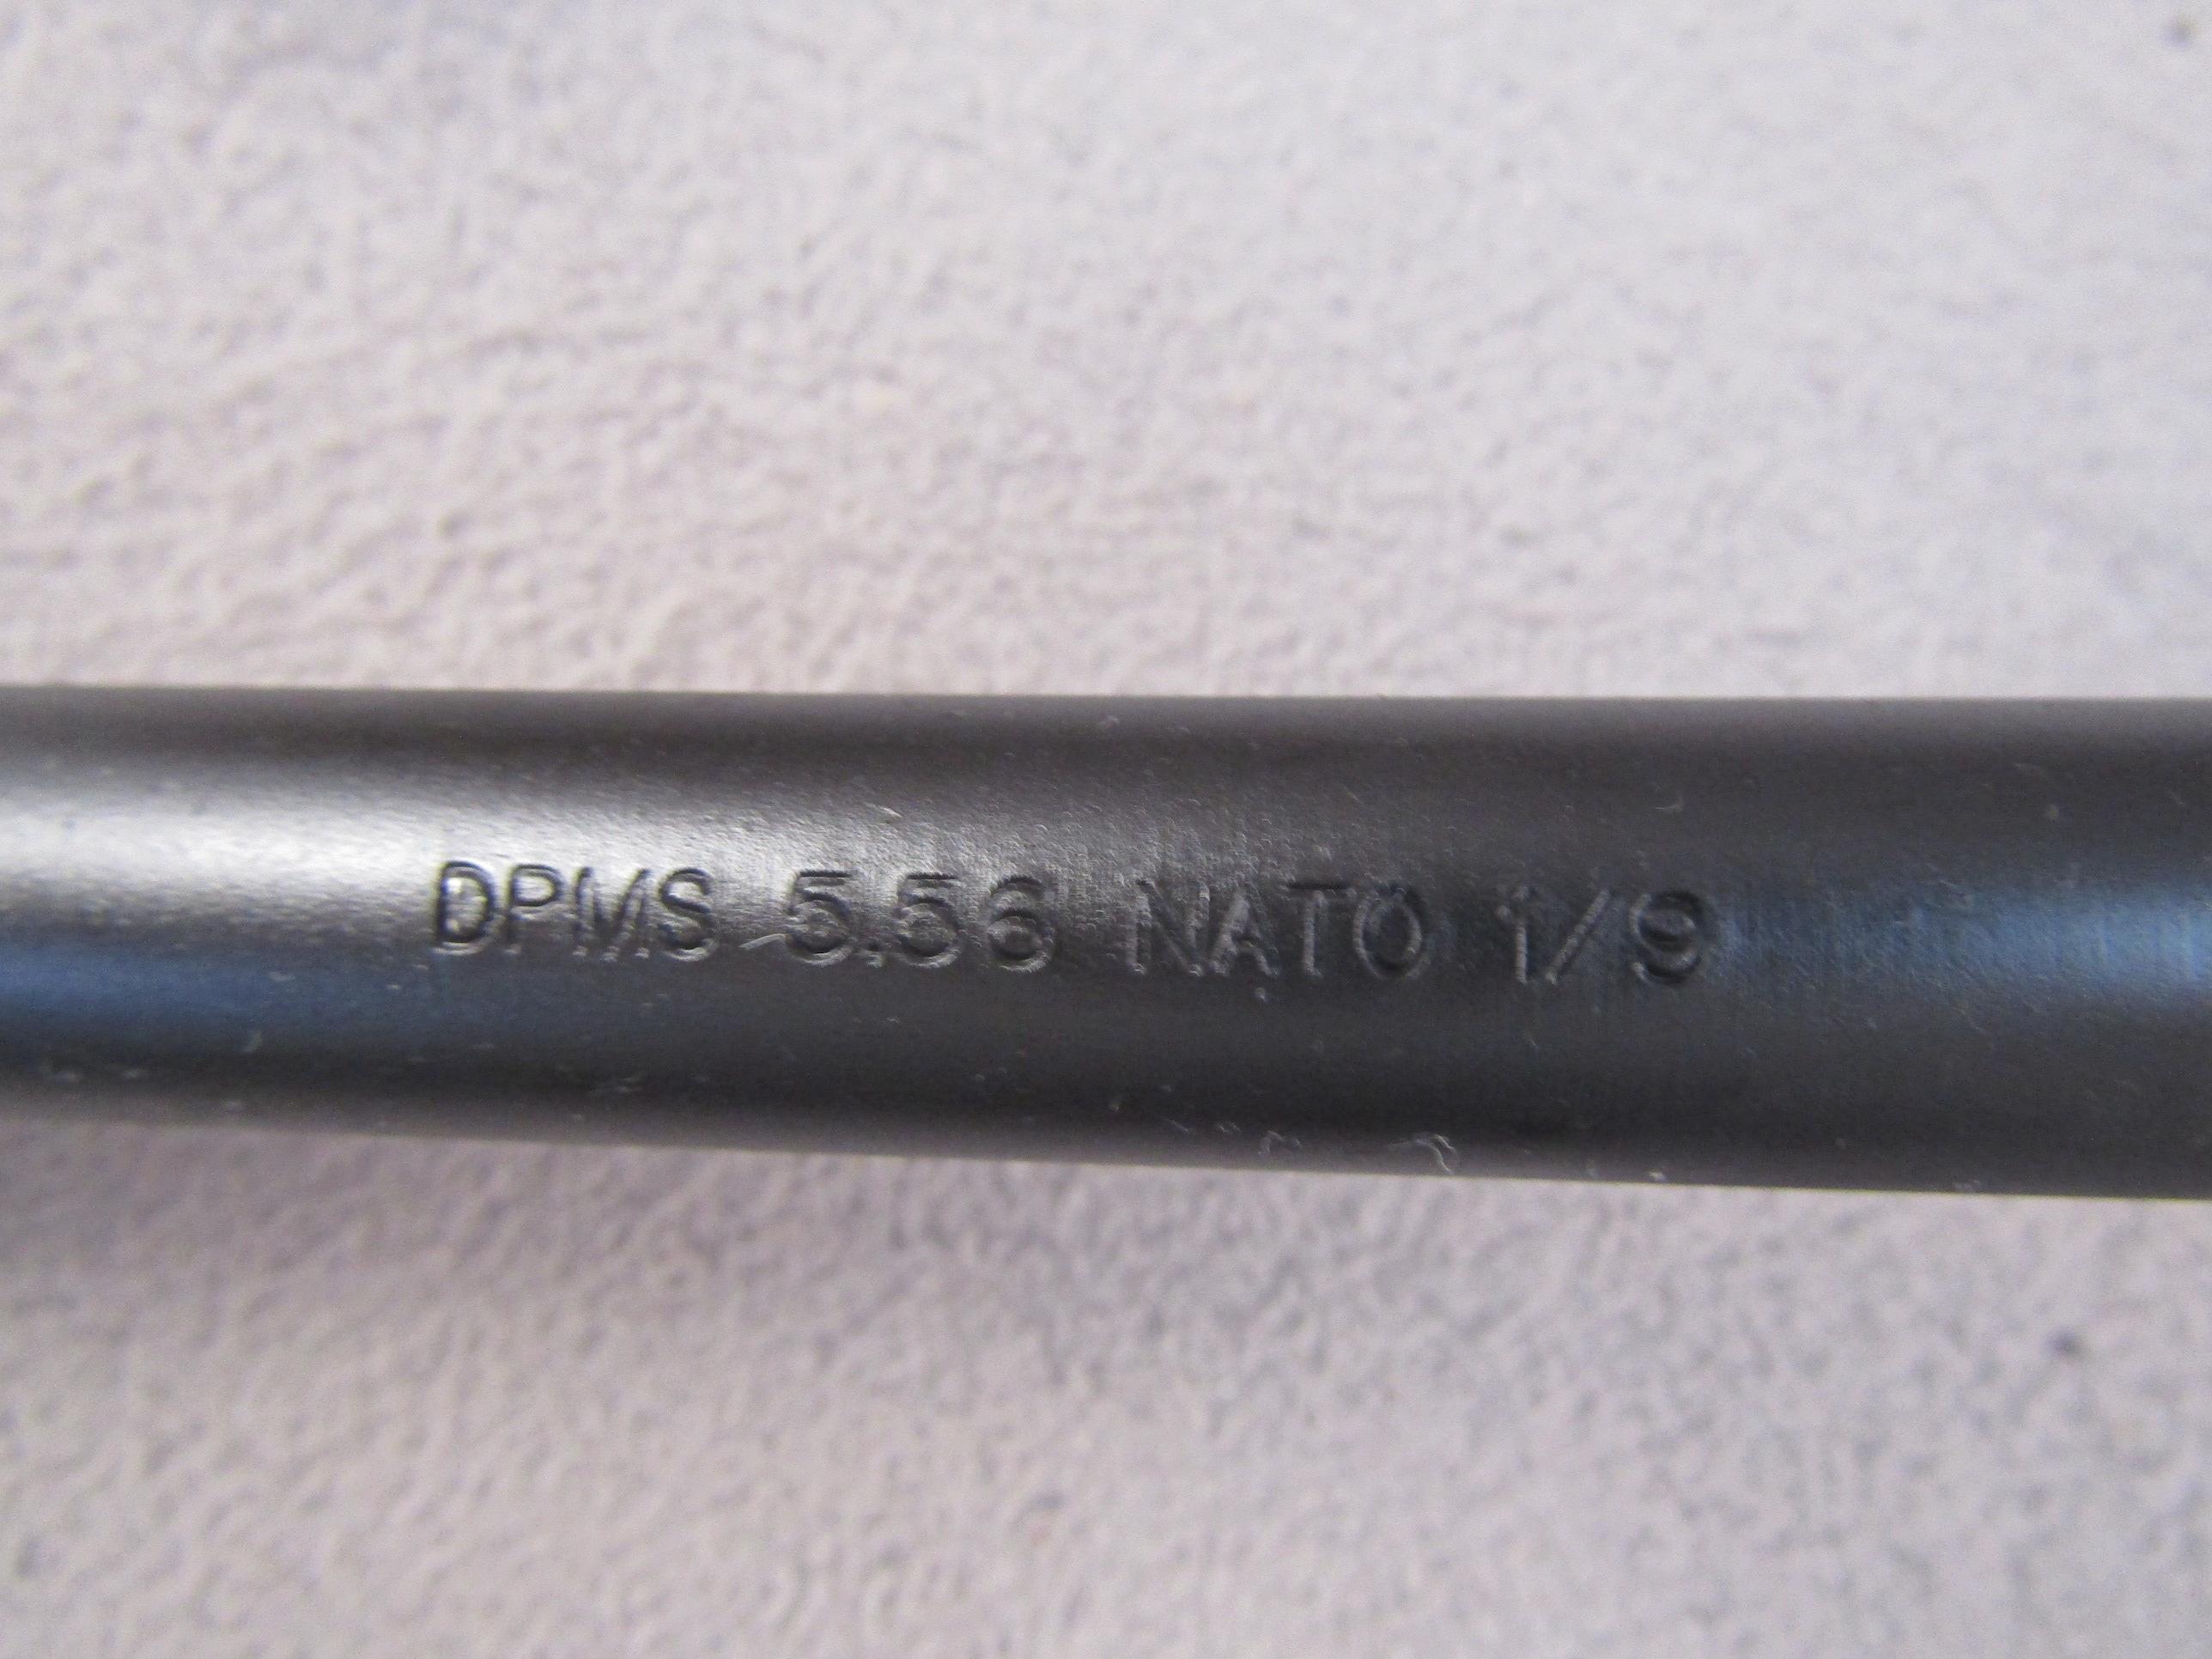 DPMS Model A-15, Semi-Auto Rifle, 5.56, S#DKF914406